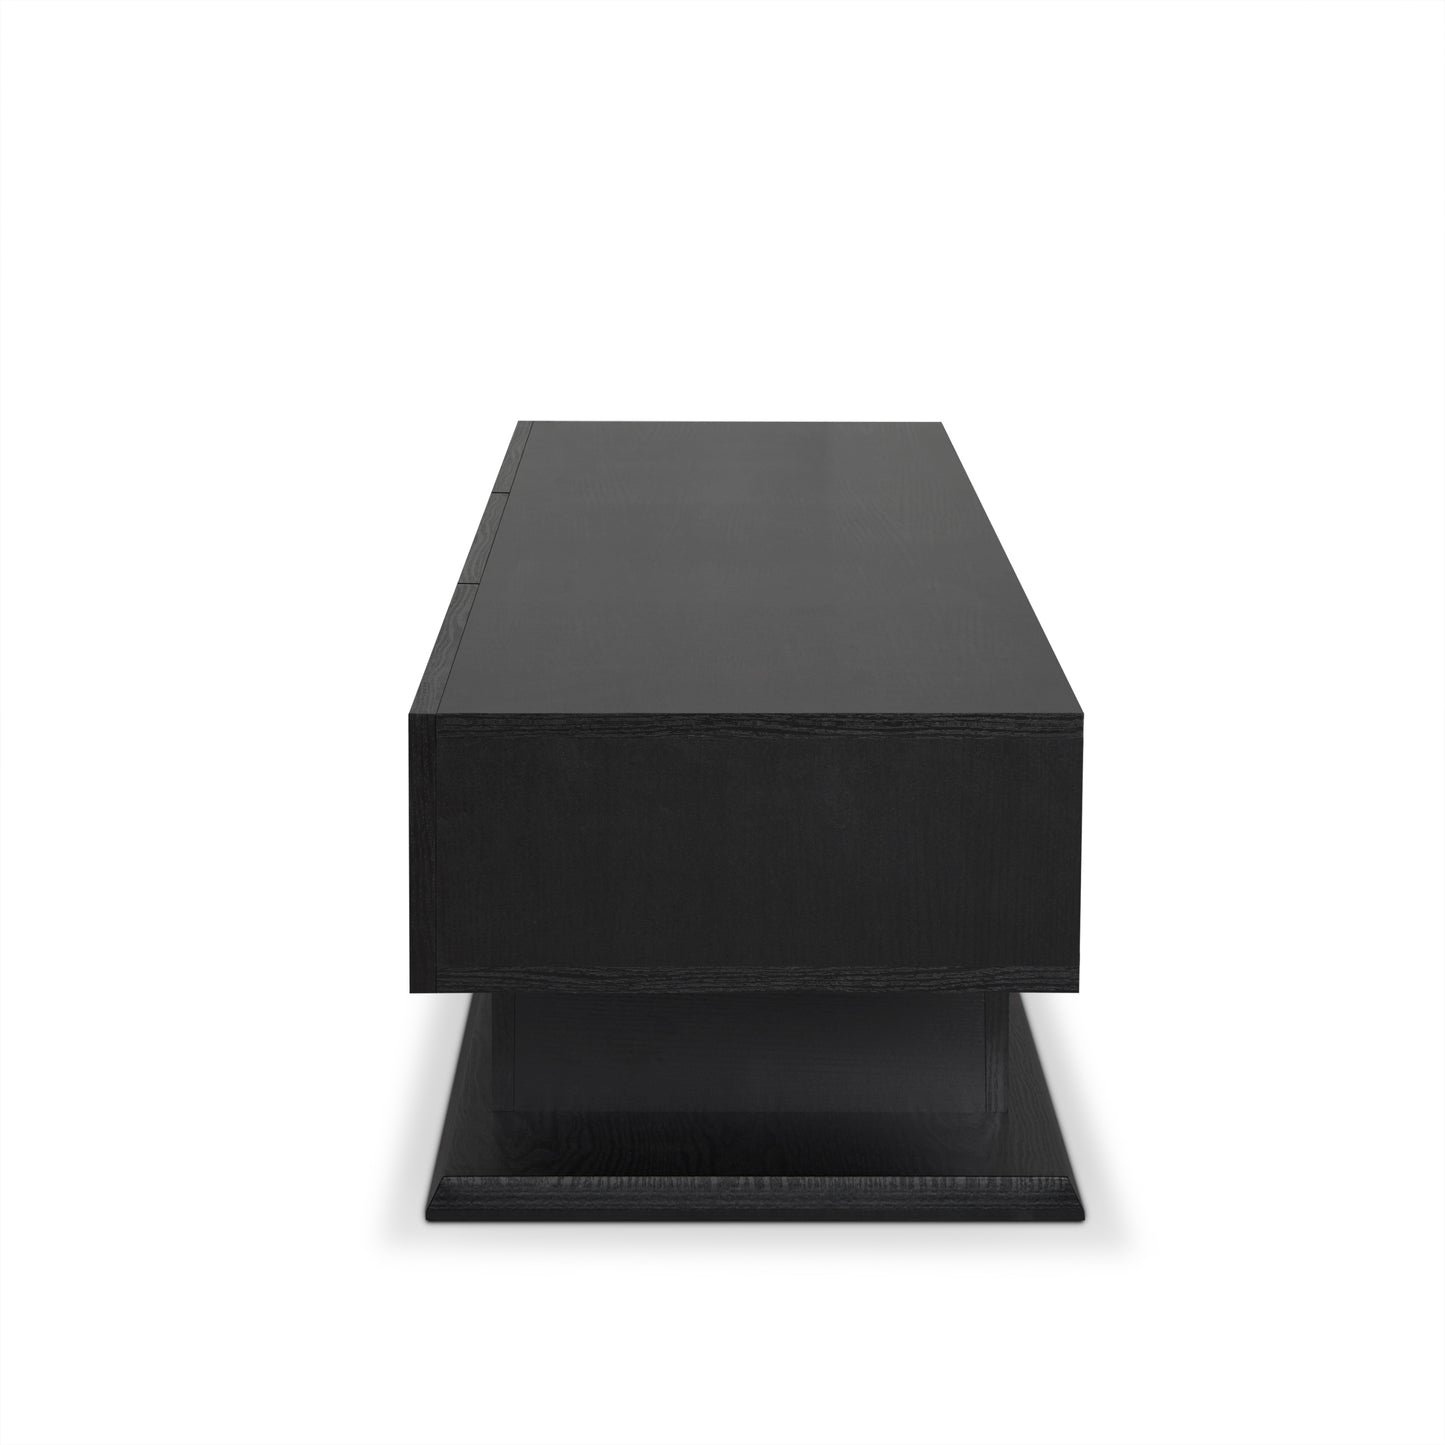 ACME Follian TV Stand in Black 80635 - Enova Luxe Home Store